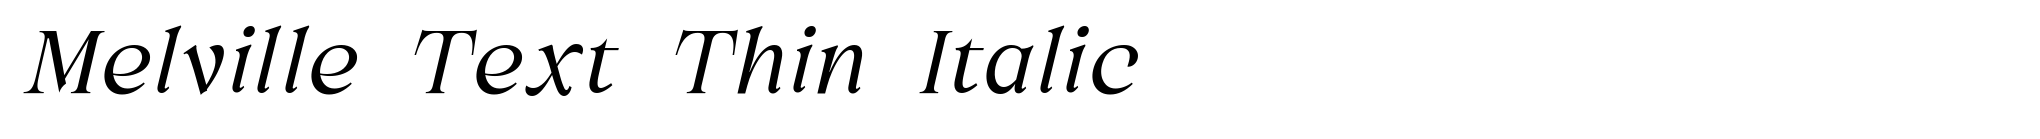 Melville Text Thin Italic image